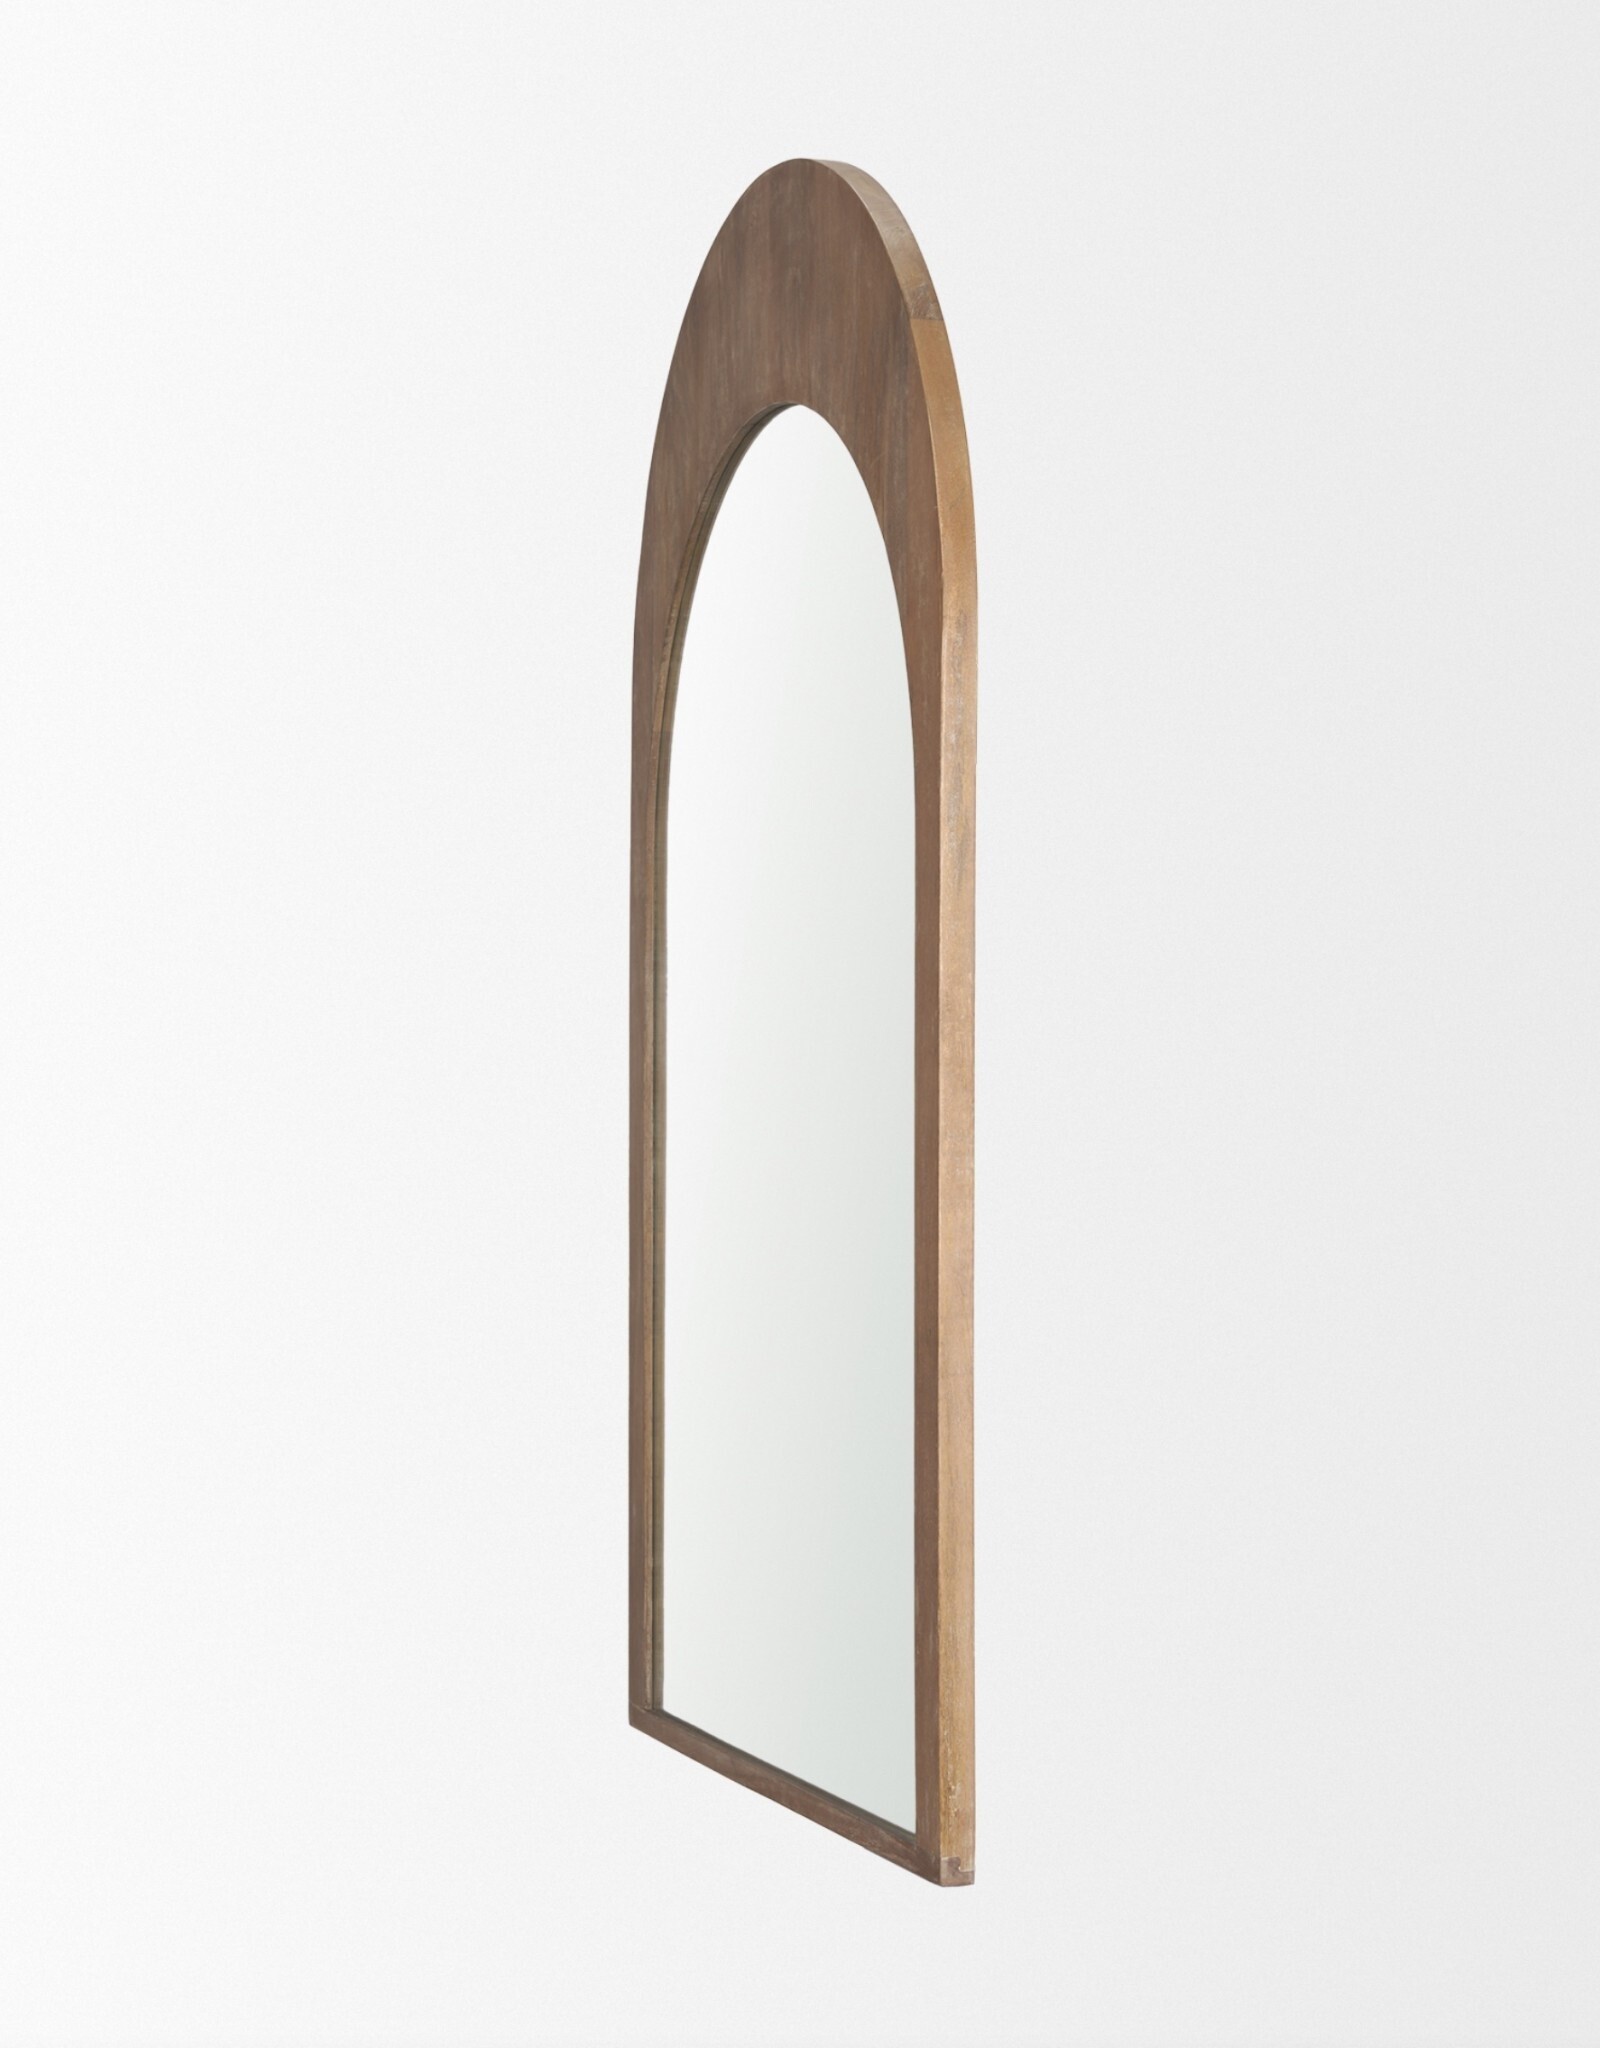 Celeste 30"x48" Arched Mirror